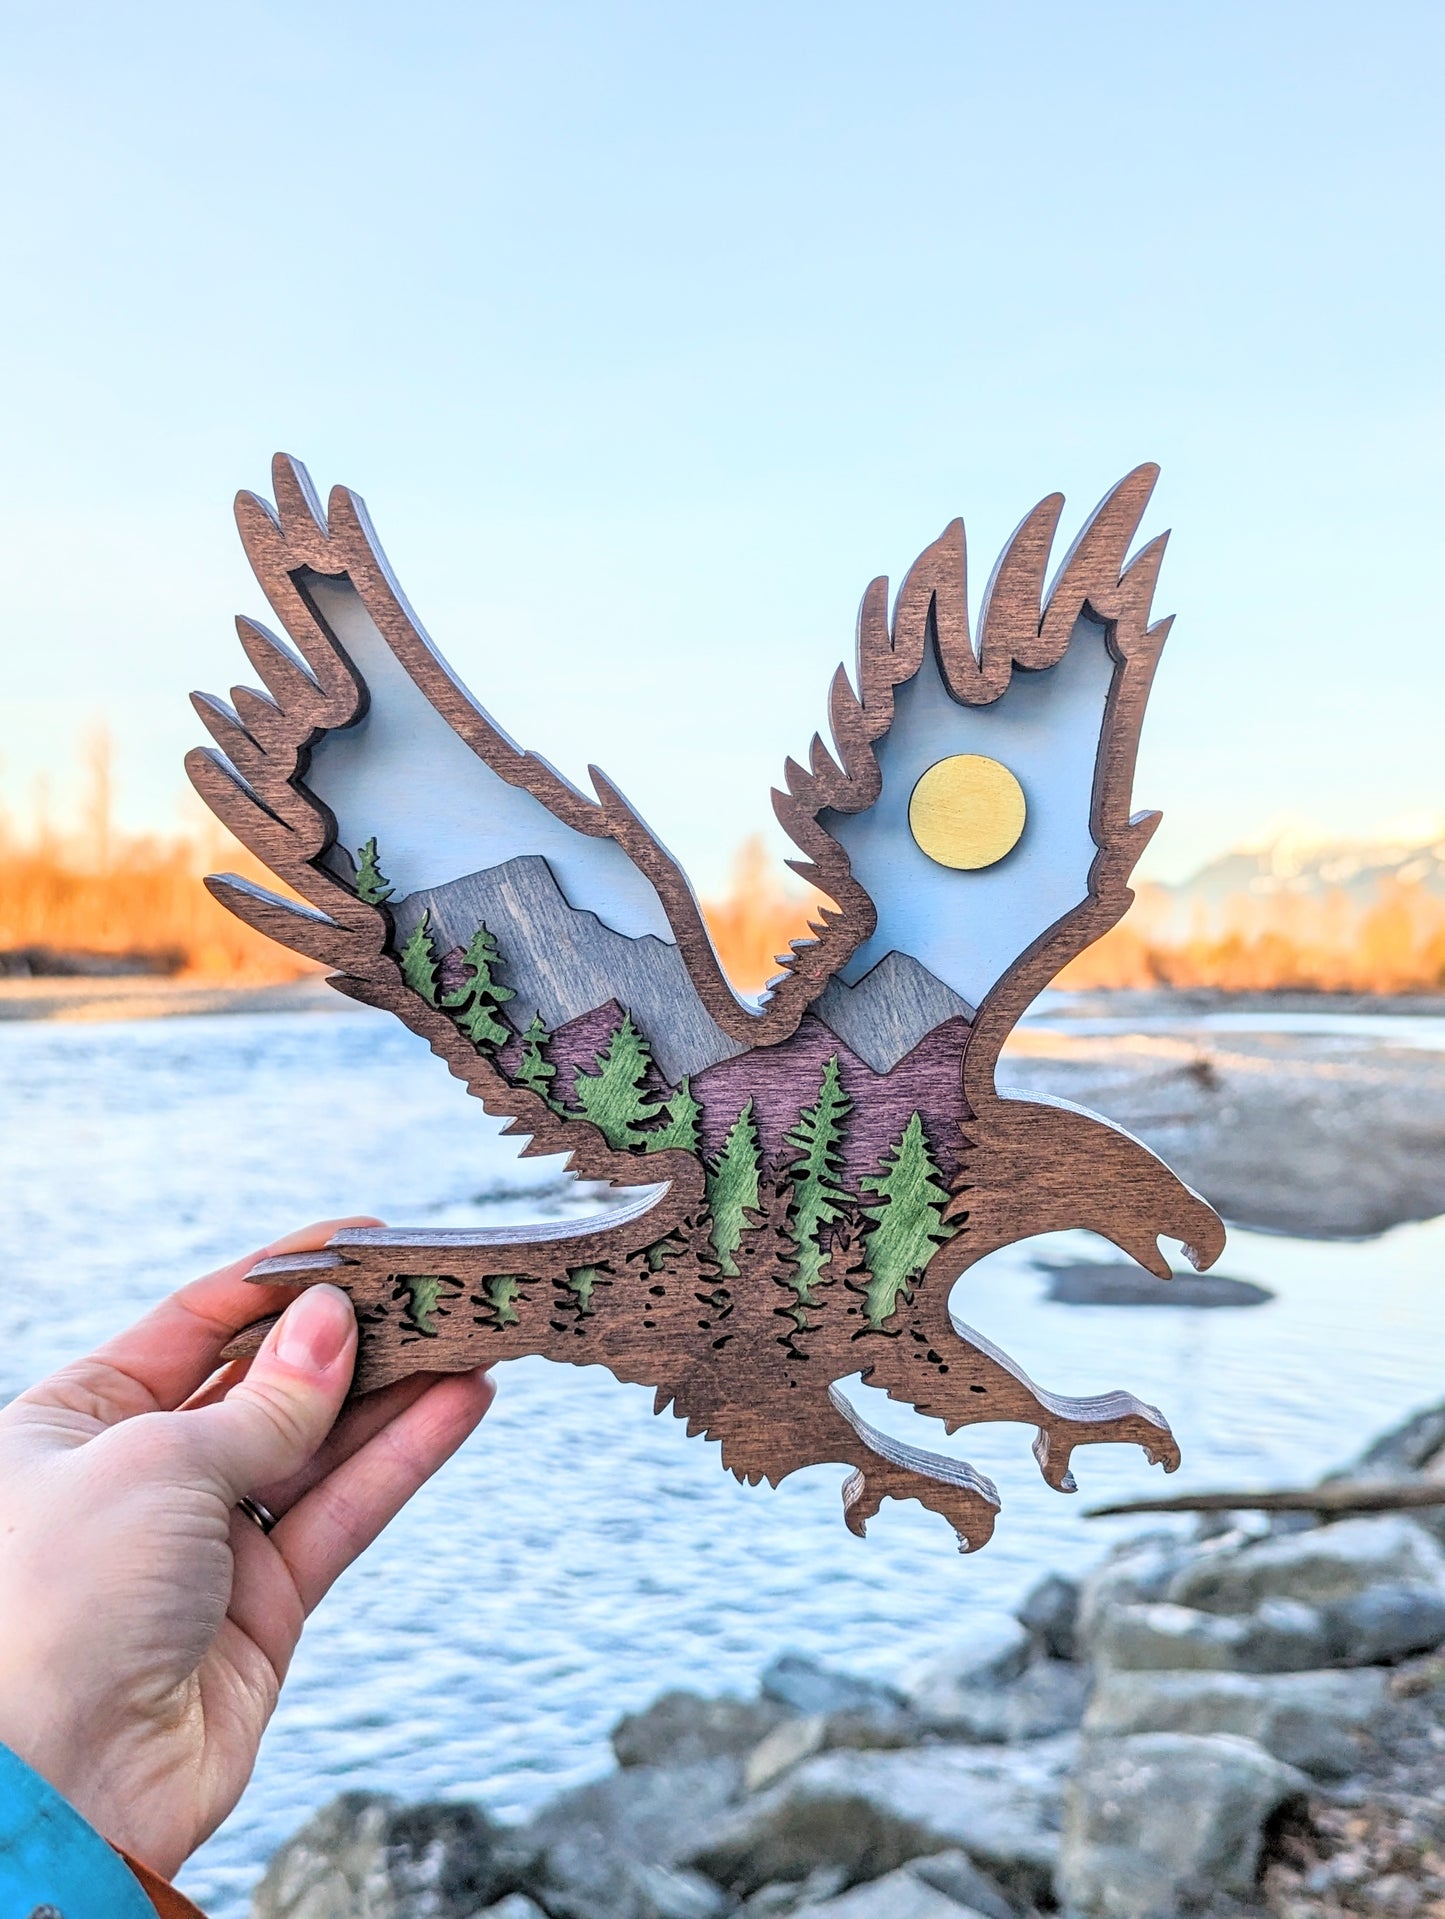 3D Layered Wooden Eagle Art / Eagle shaped layered mountain scene